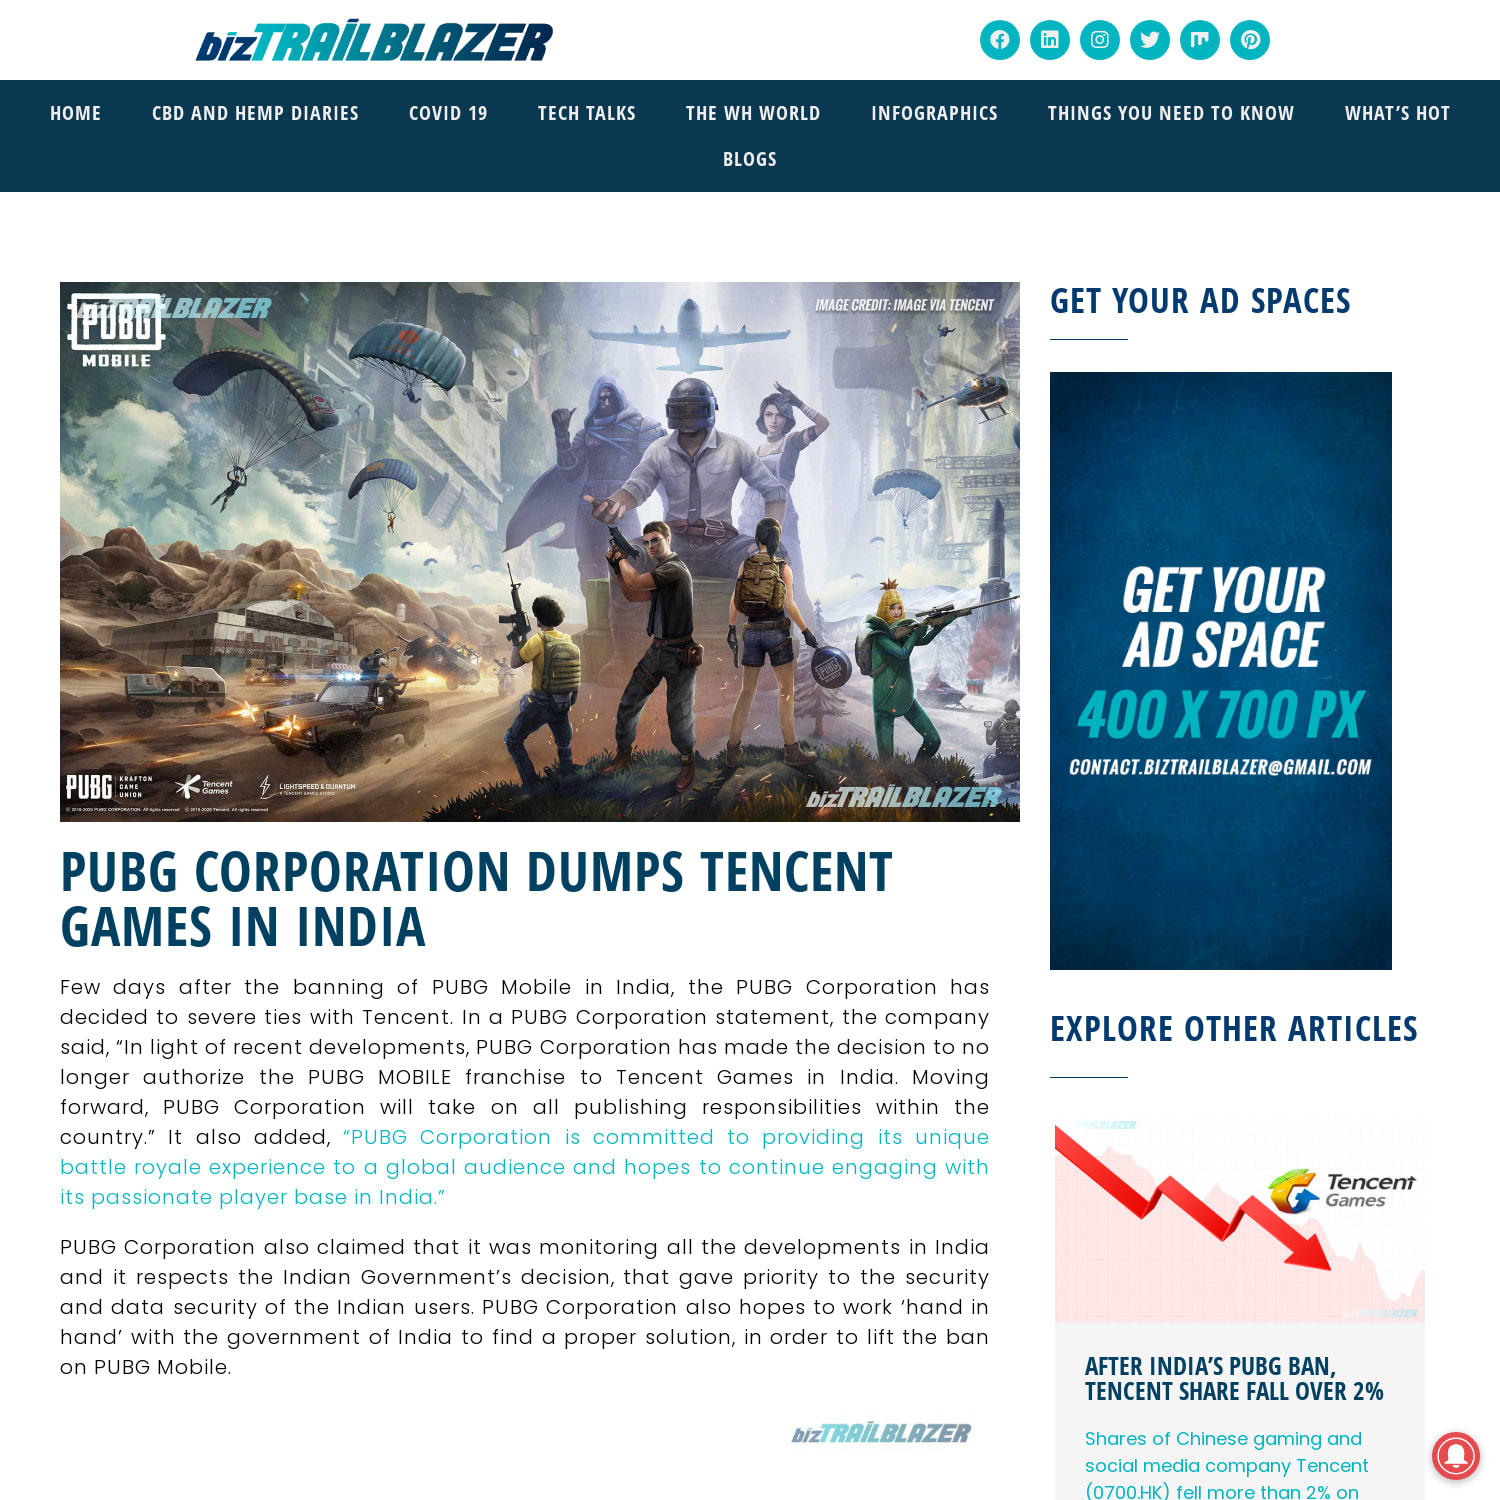 PUBG Corporation Dumps Tencent Games in India